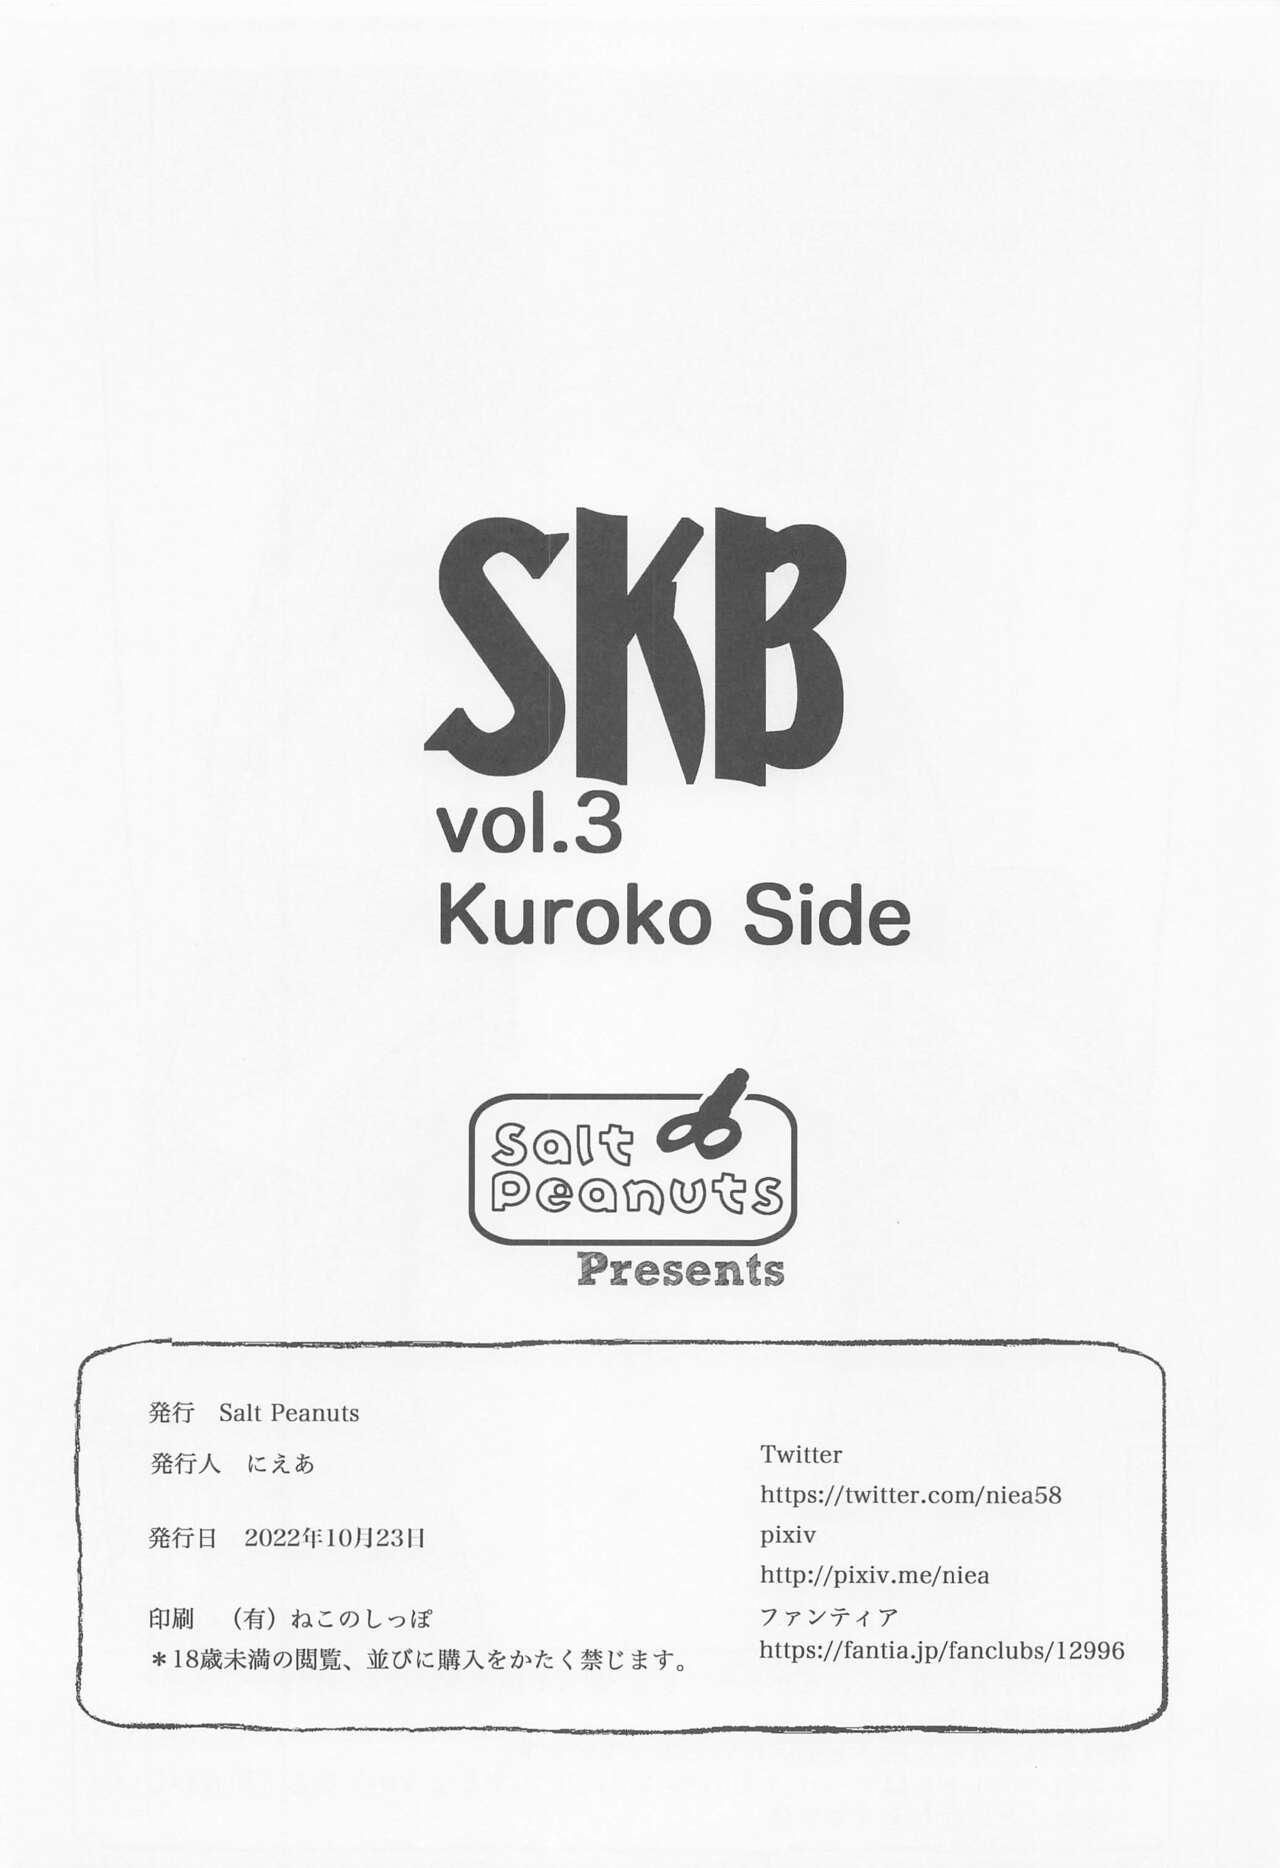 Skeb vol.3 Kuroko Side 26